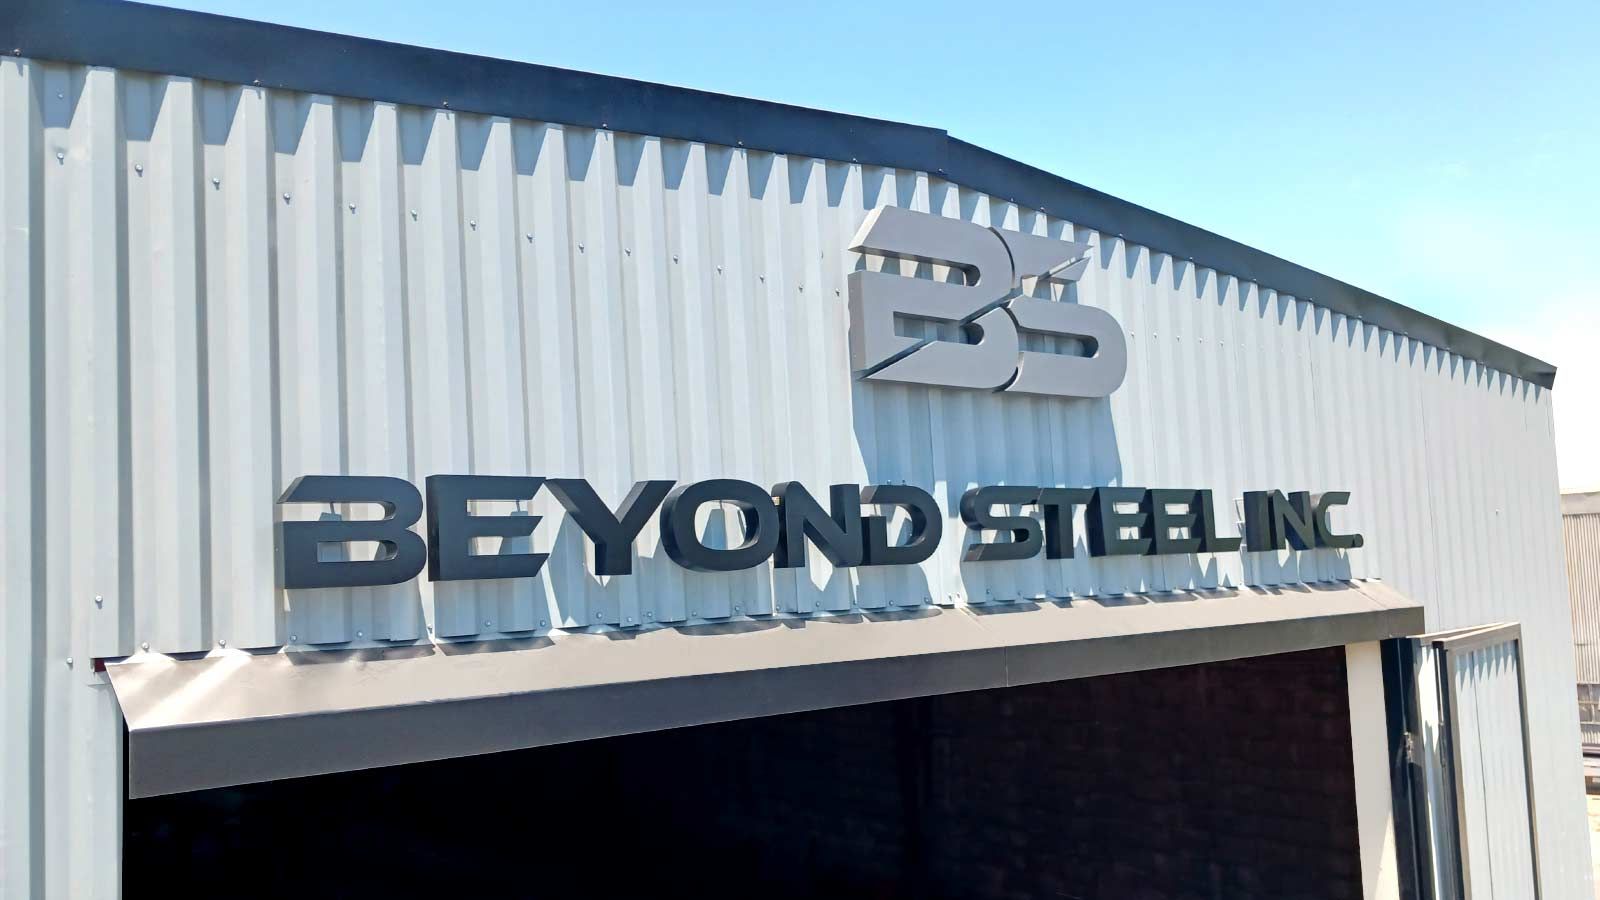 Beyond Steel Inc. backlit letters on the building